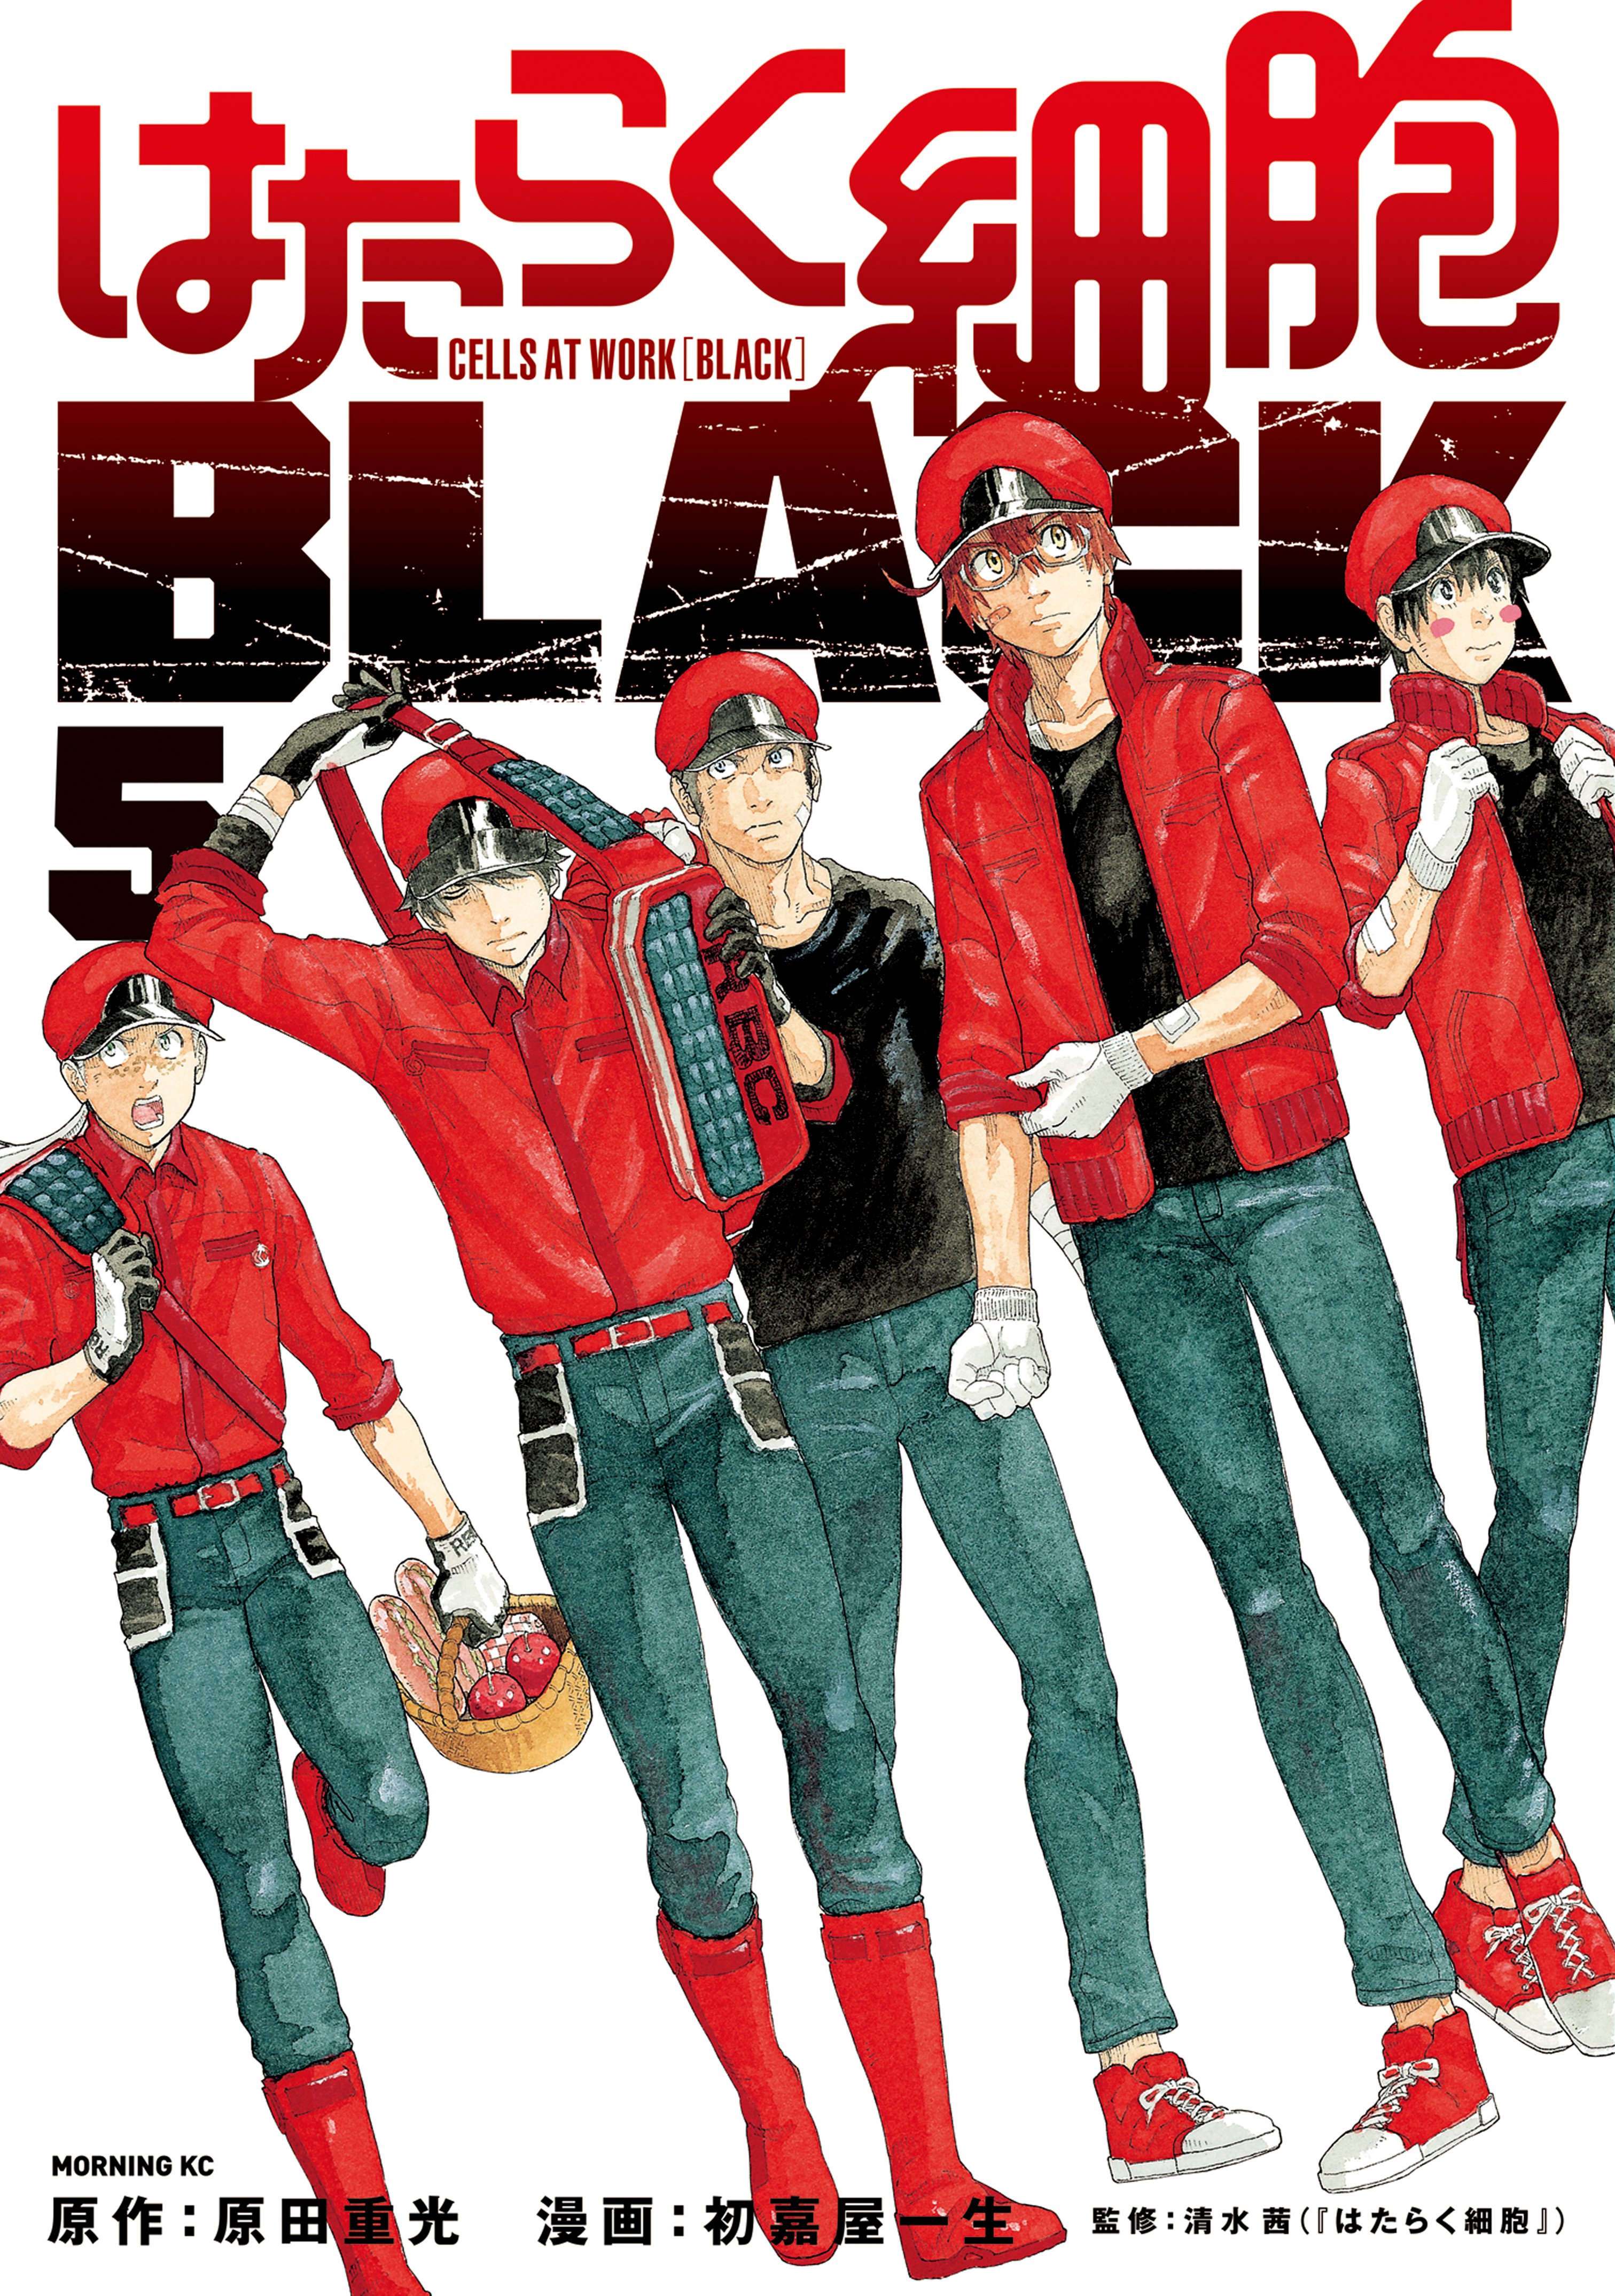 Read Hataraku Saibou Black Chapter : Volume Extras - Mangadex